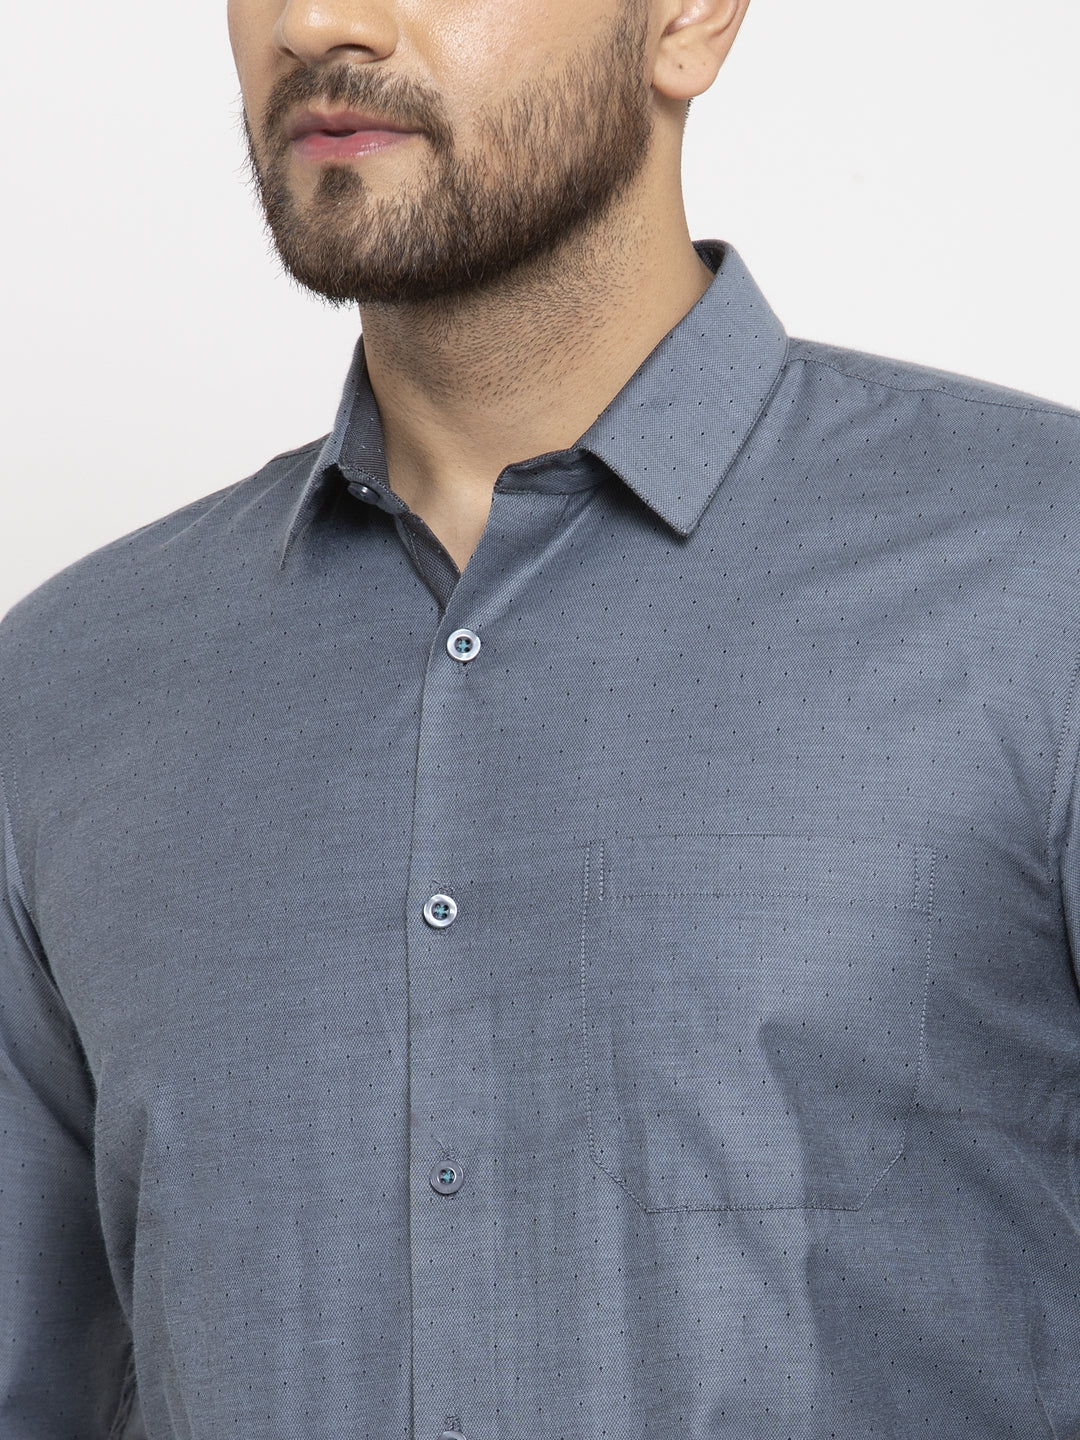 Jainish Grey Men's Cotton Polka Dots Formal Shirt's ( SF 761Grey )